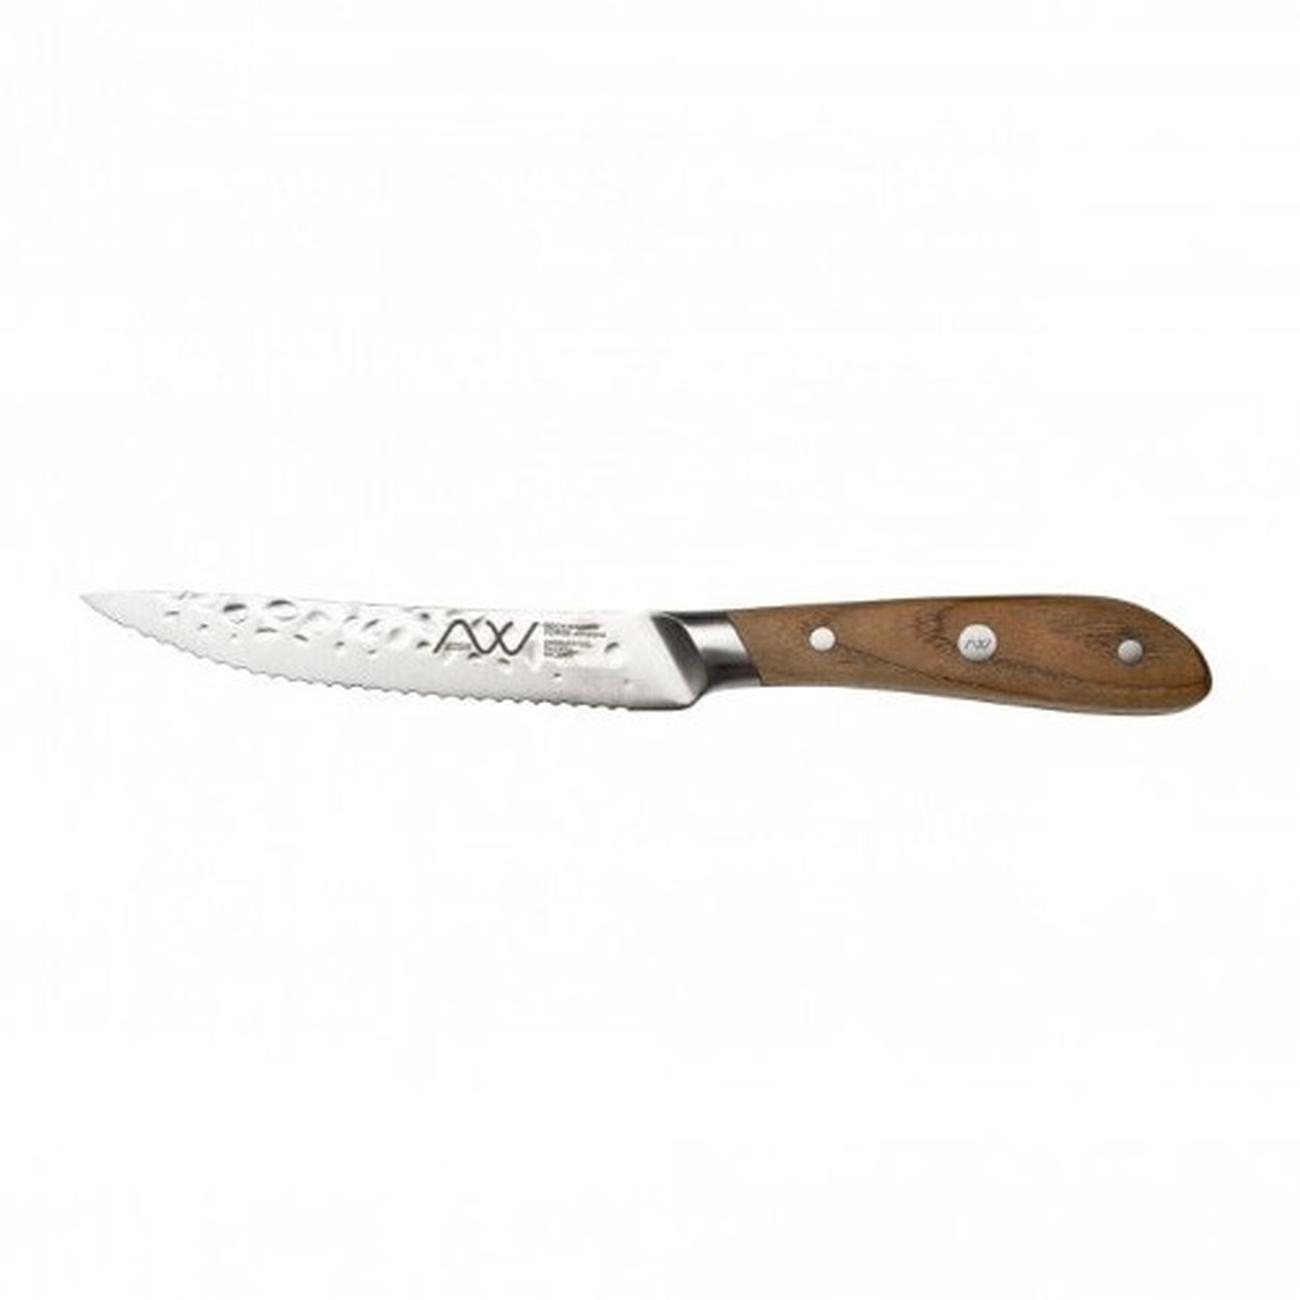 rf-ashwood-steak-knife-11cm - Rockingham Forge Ashwood Steak Knife 11cm